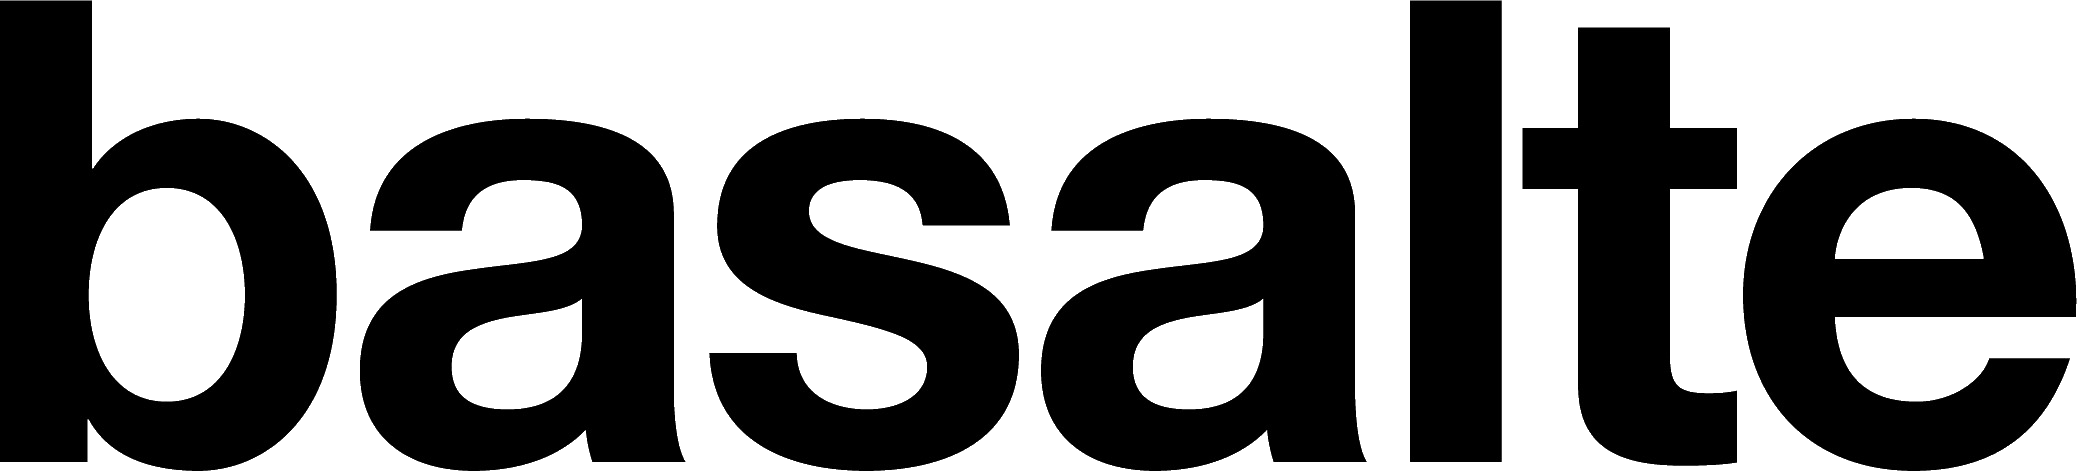 basalte logo